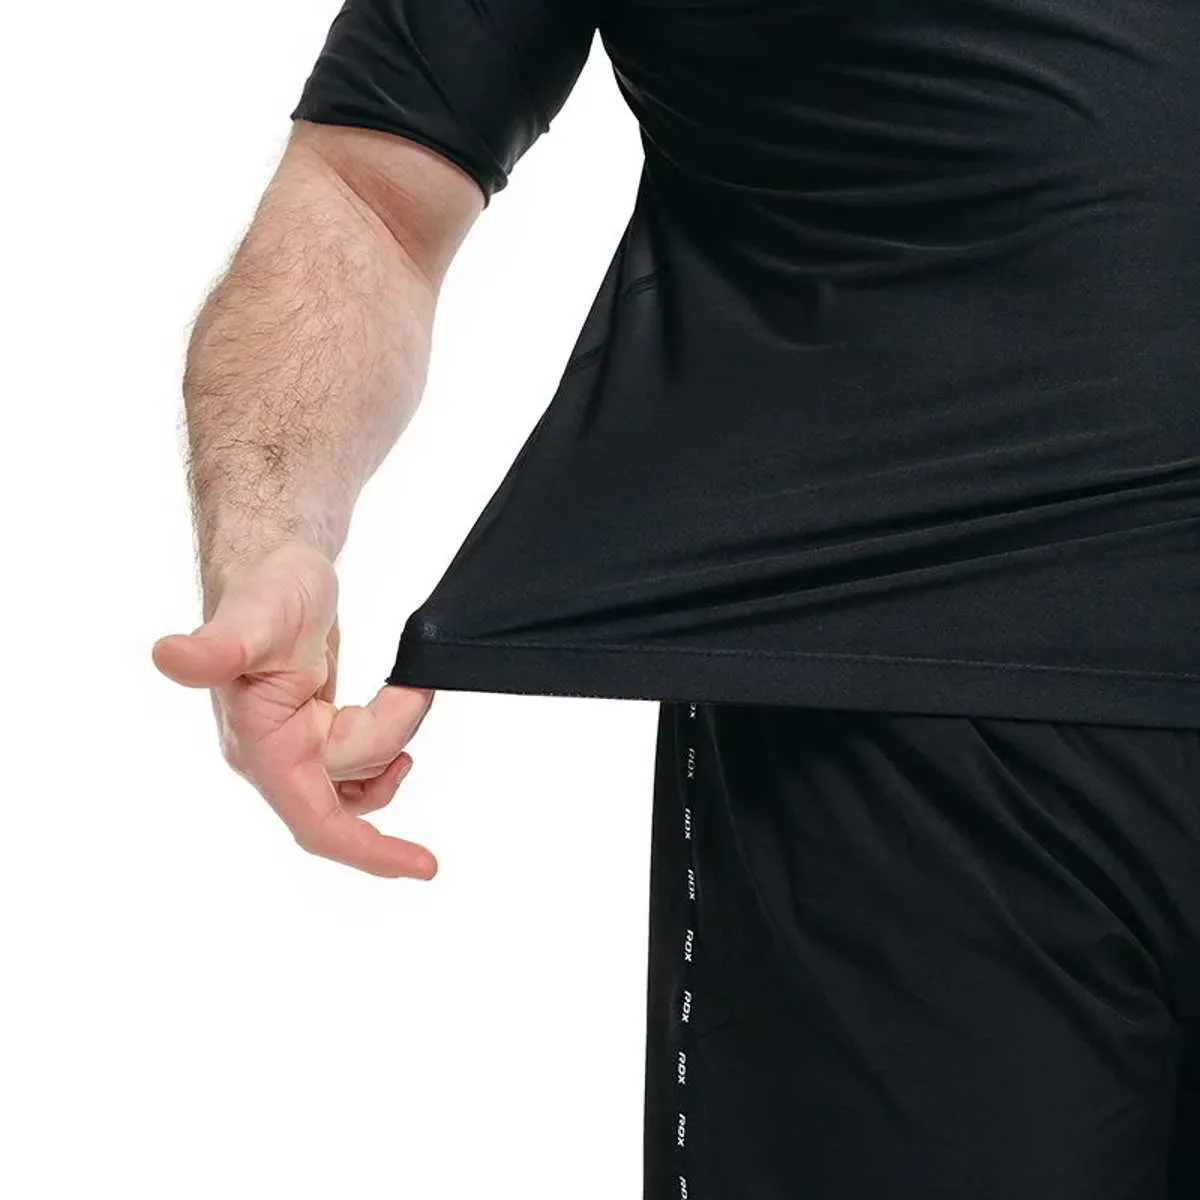 Sweatshirt sleeveless black with zip